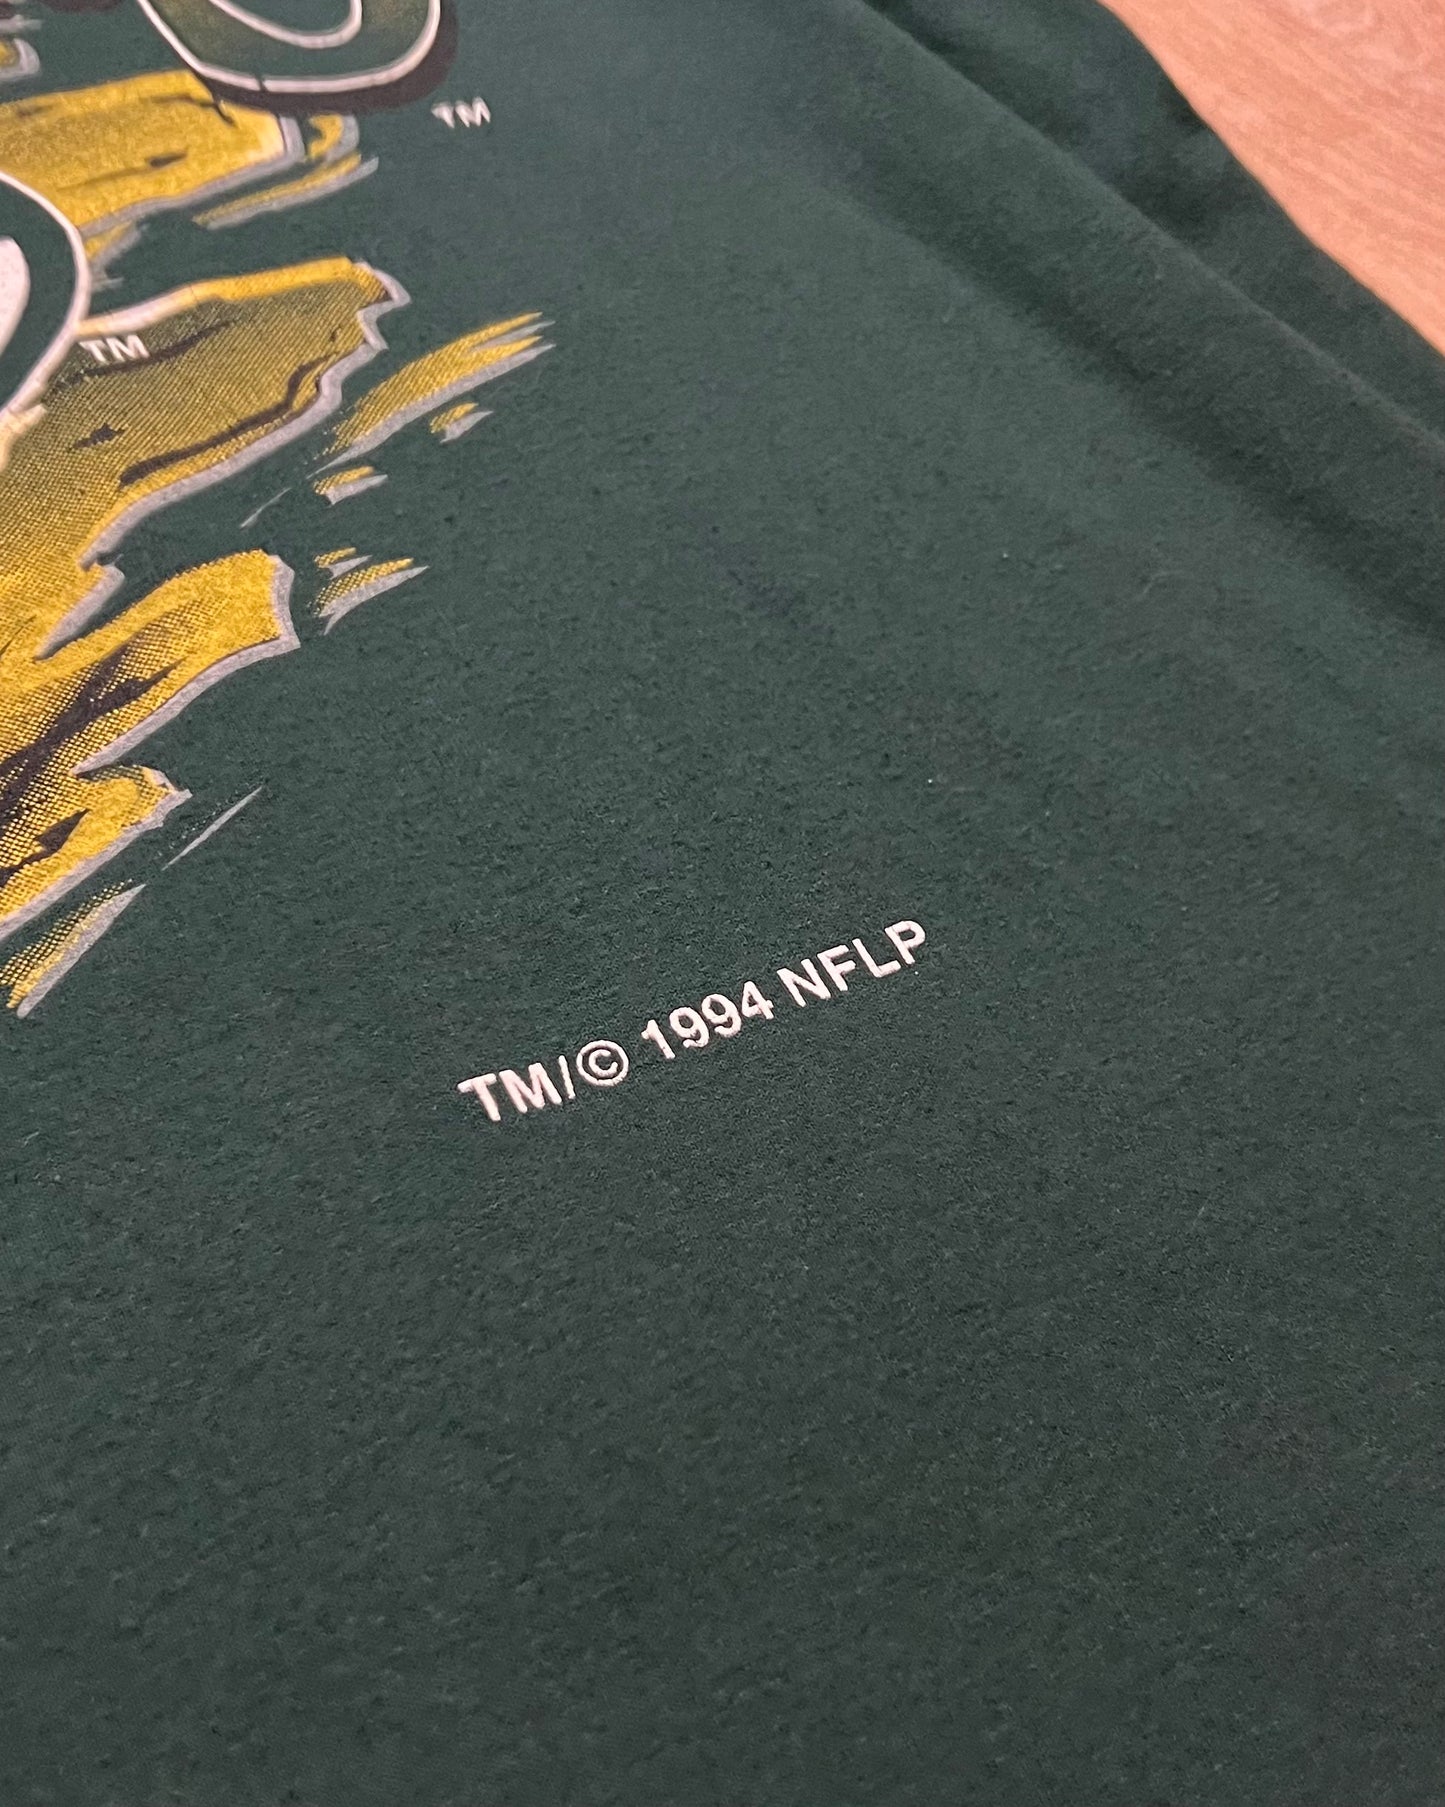 1994 Green Bay Packers Logo 7 Single Stitch T-Shirt